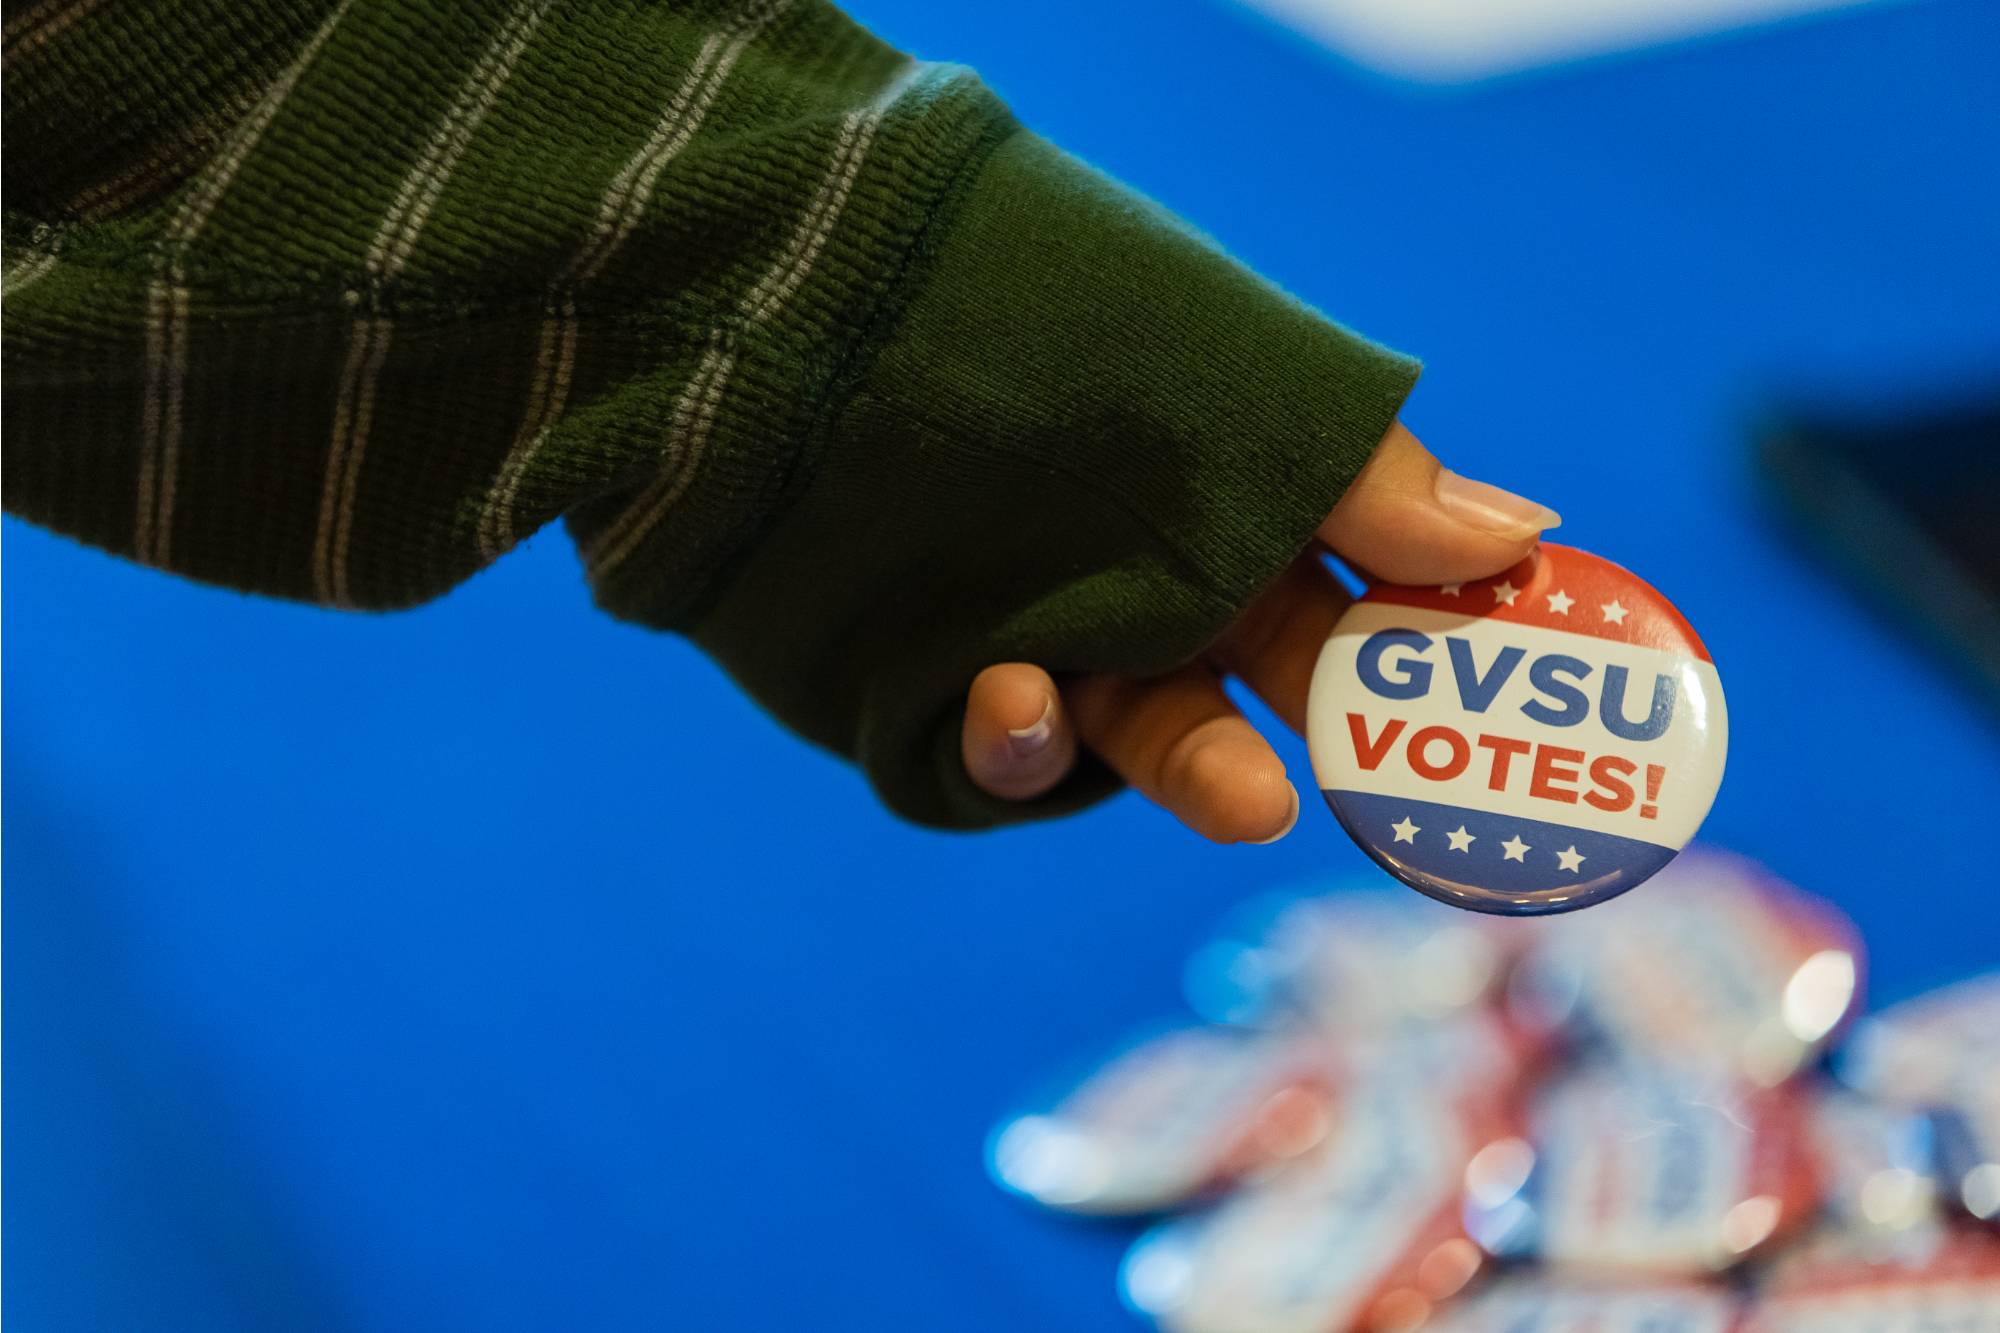 a hand holding a GVSU votes button